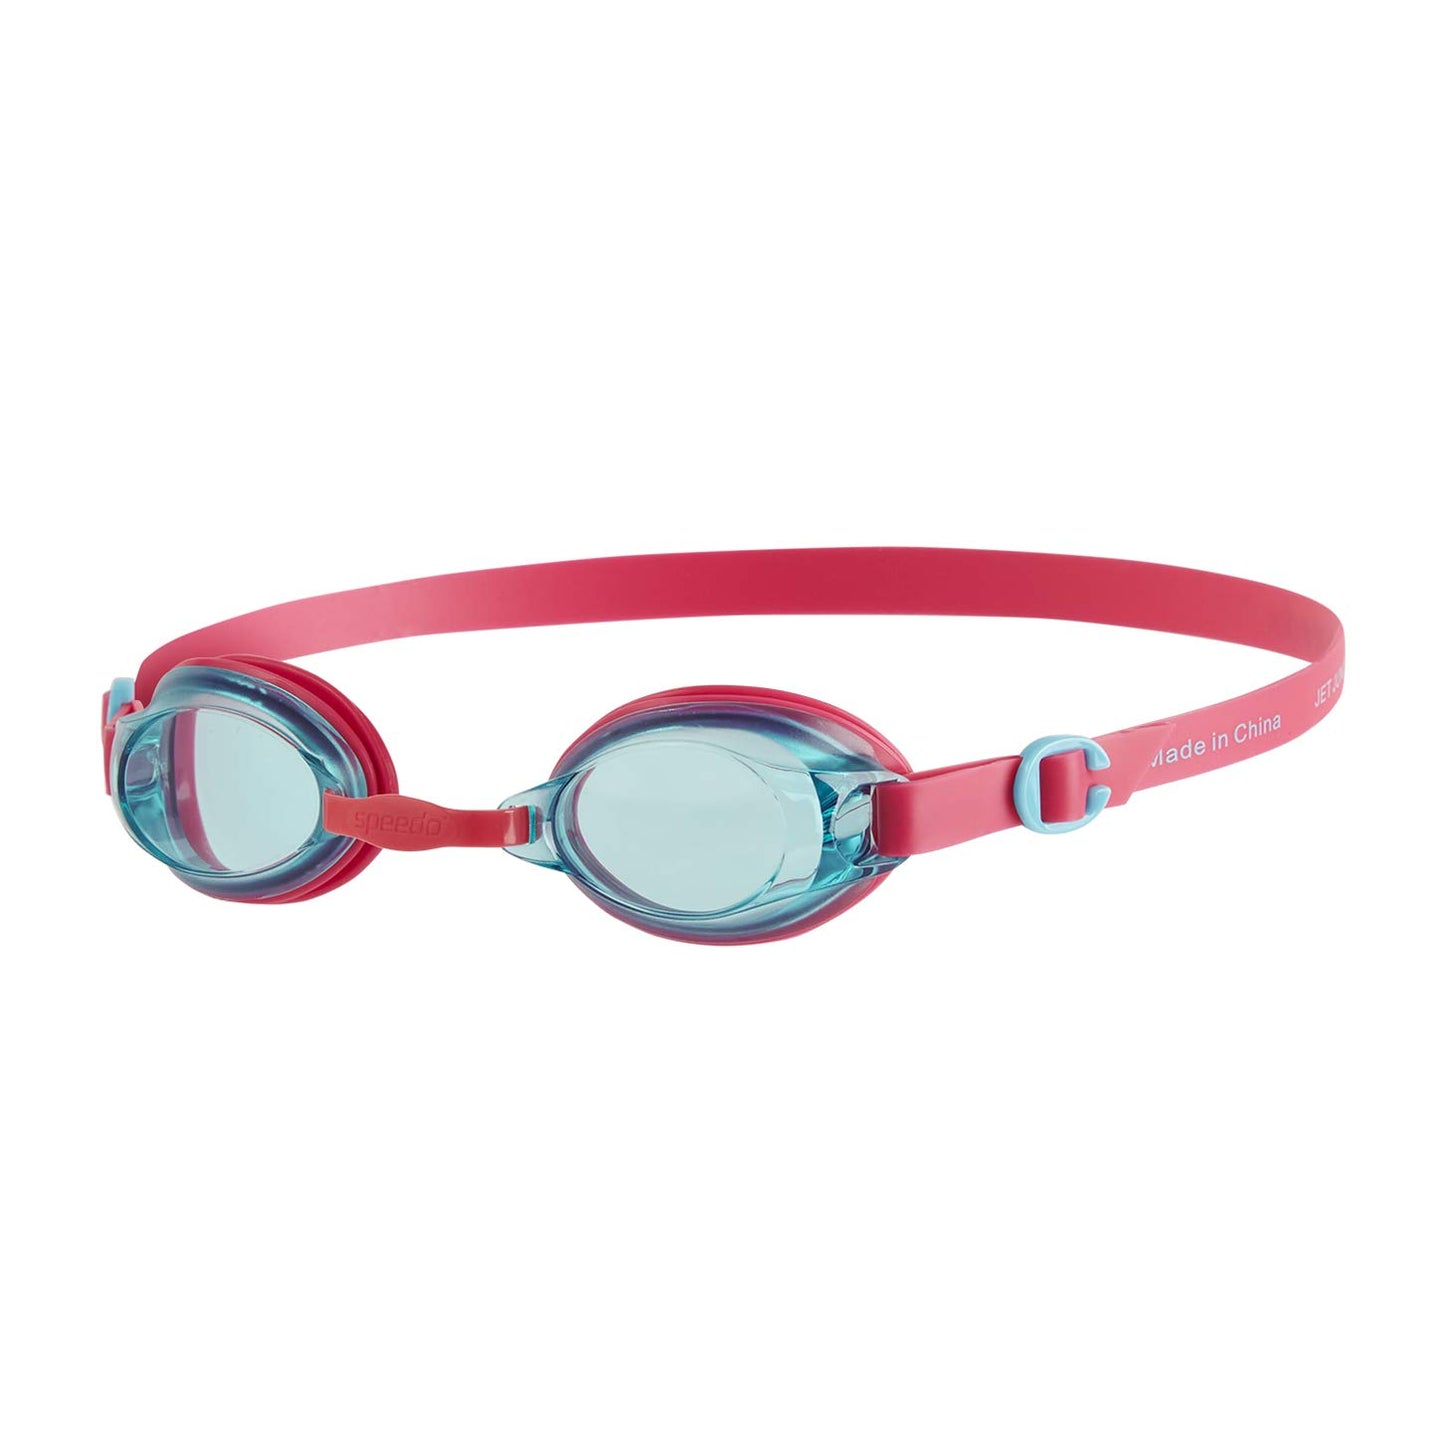 Speedo Junior Jet Swimming Goggles, Kids Free Size (Ecstatic Pink/Aquatic) - Best Price online Prokicksports.com